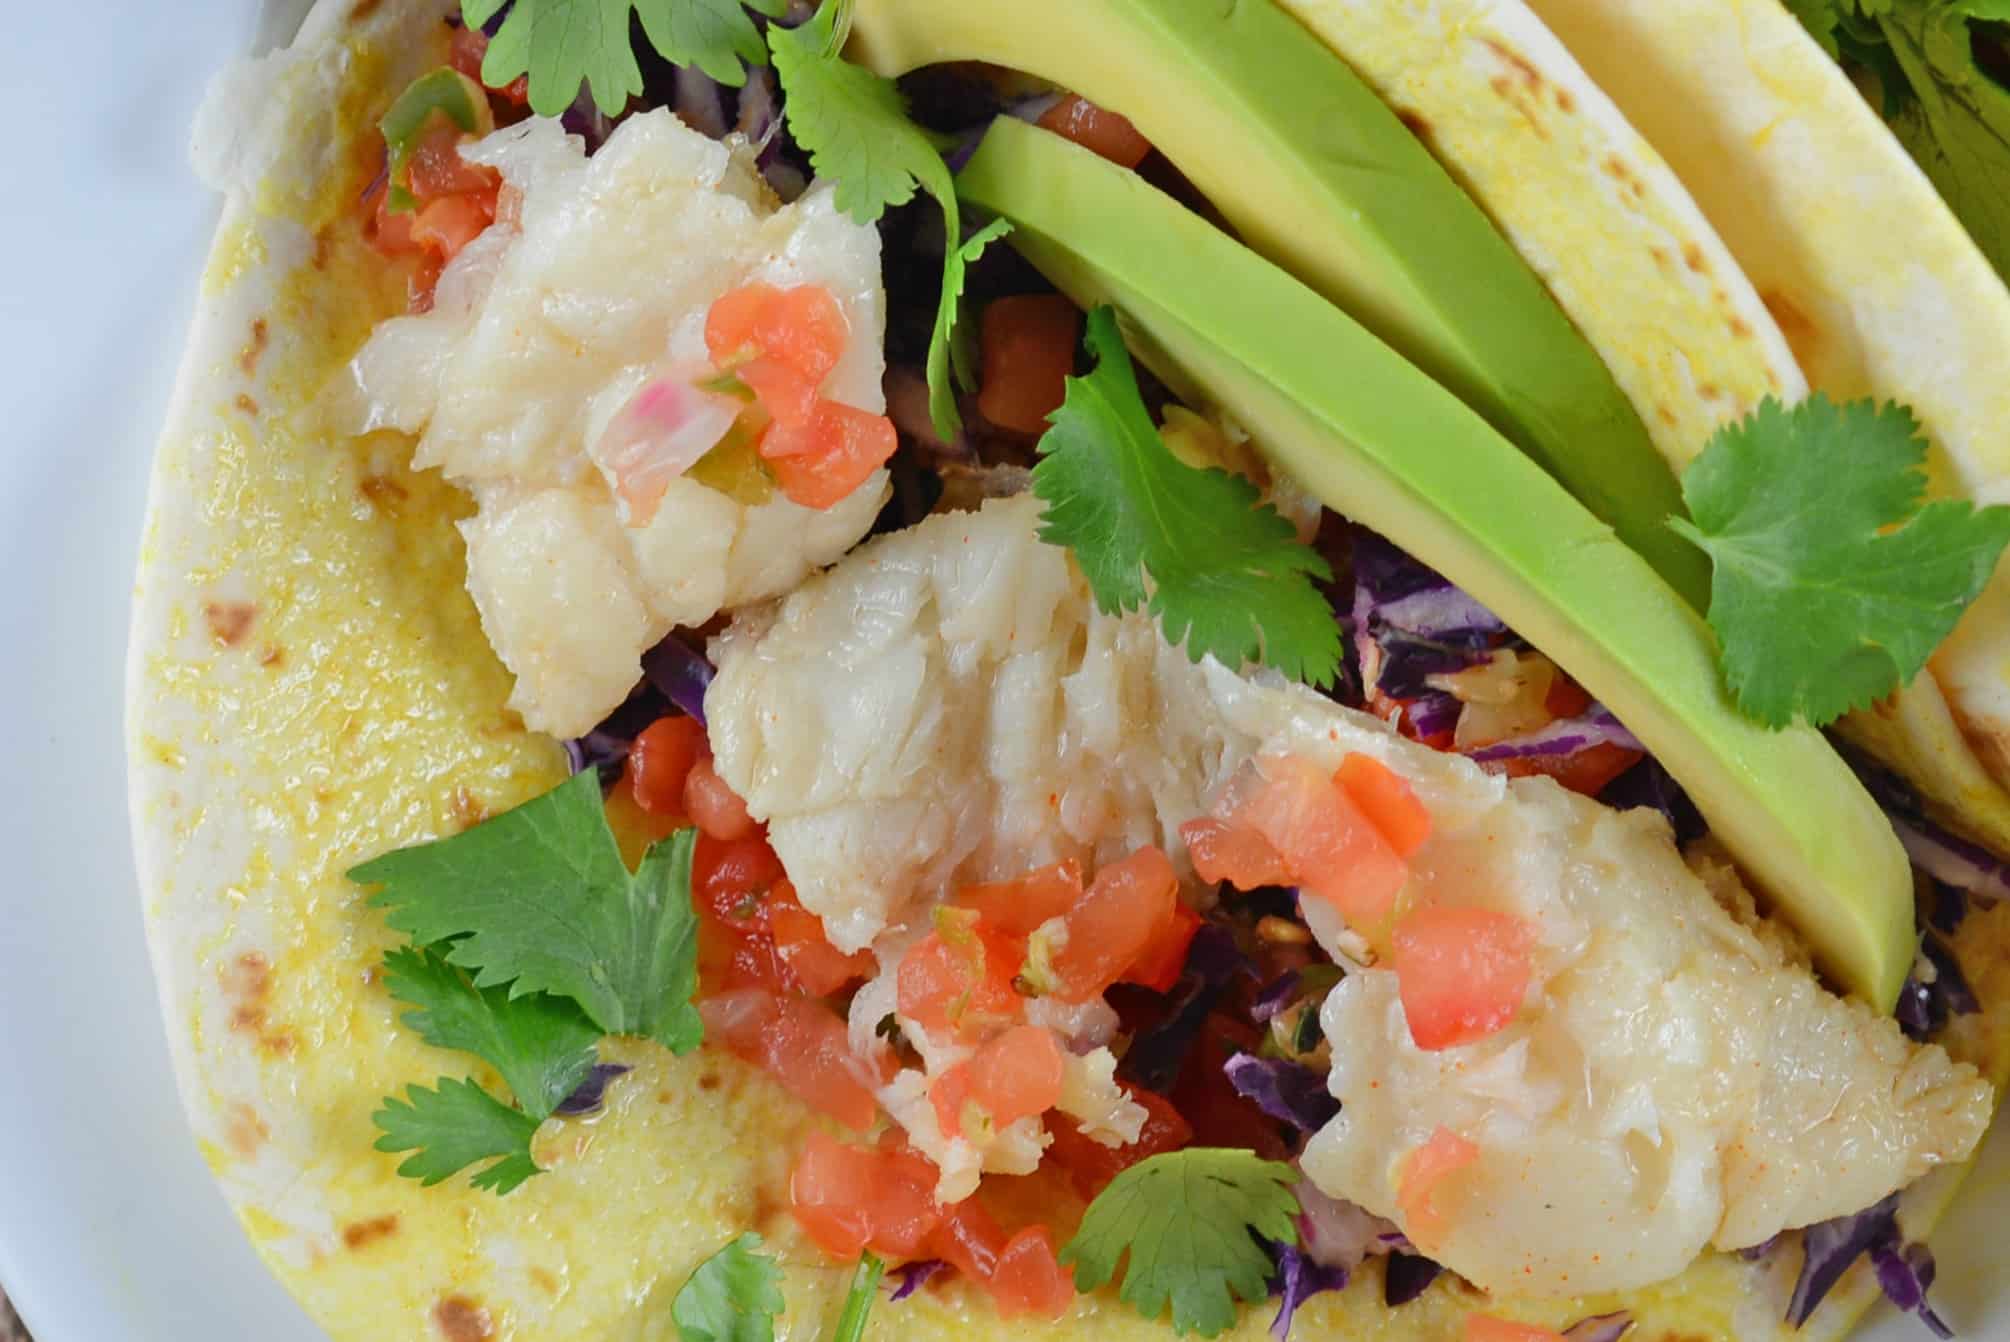 Easy fish tacos full of flavor with pico de gallo, shredded cabbage, avocado, queso fresco and a special homemade hot sauce. #fishtacos #tacorecipes www.savoryexperiments.com 